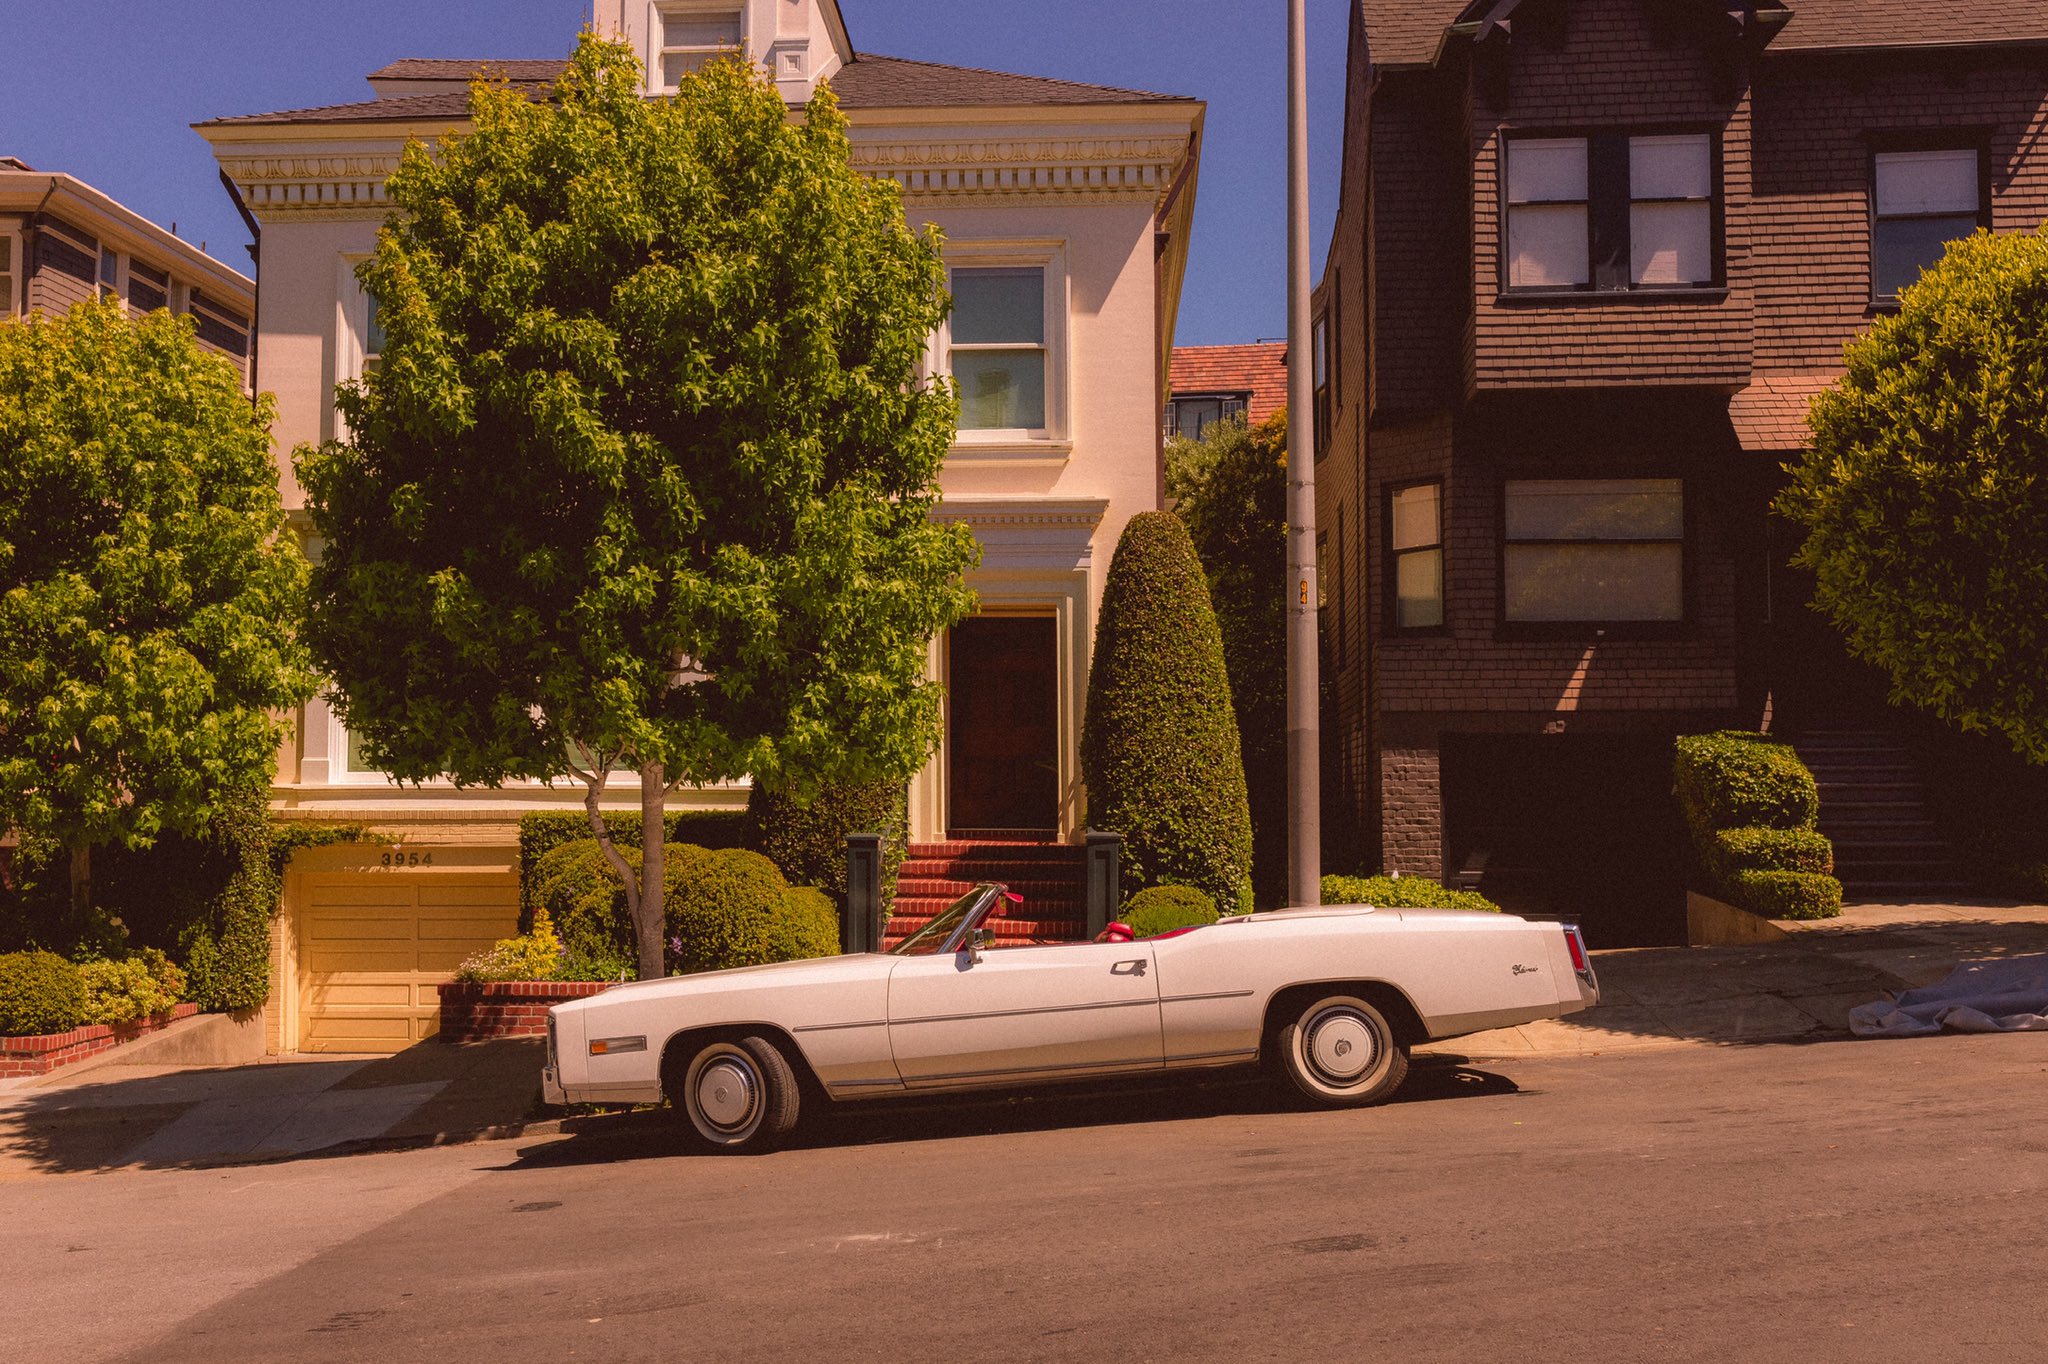 General 2048x1364 San Francisco trees car house street cabrio